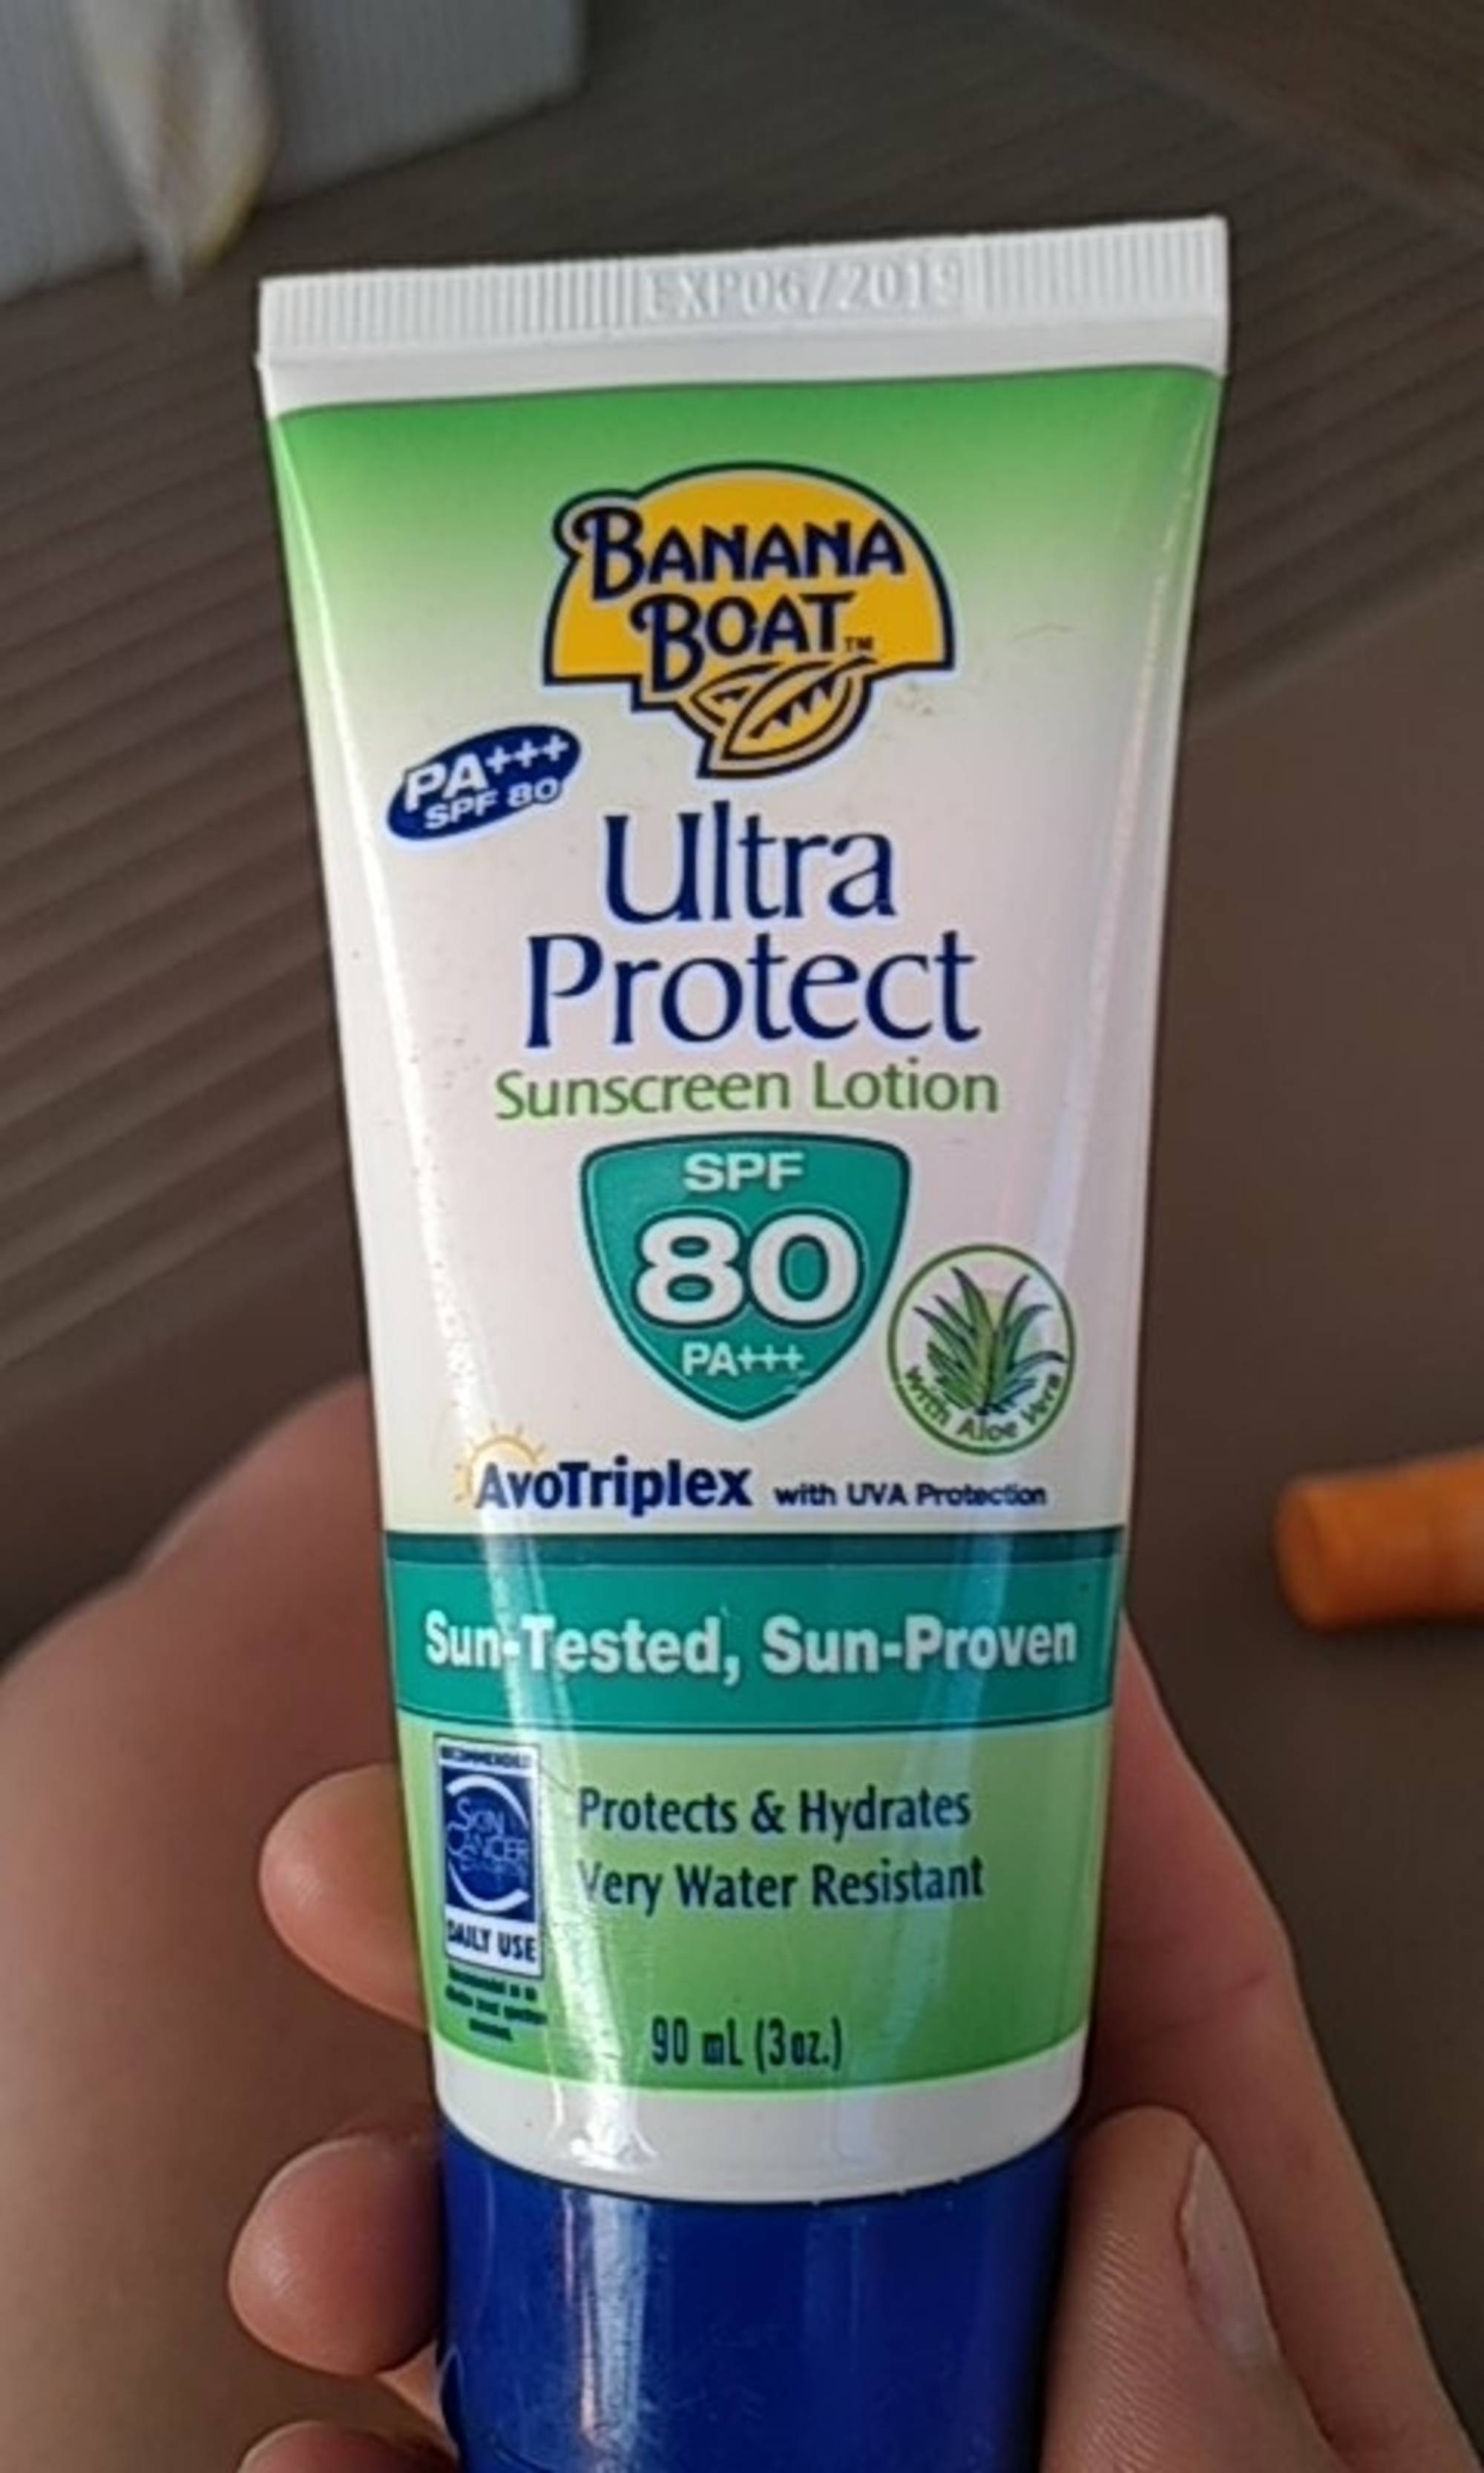 BANANA BOAT - Ultra protect - Sunscreen Lotion SPF 80